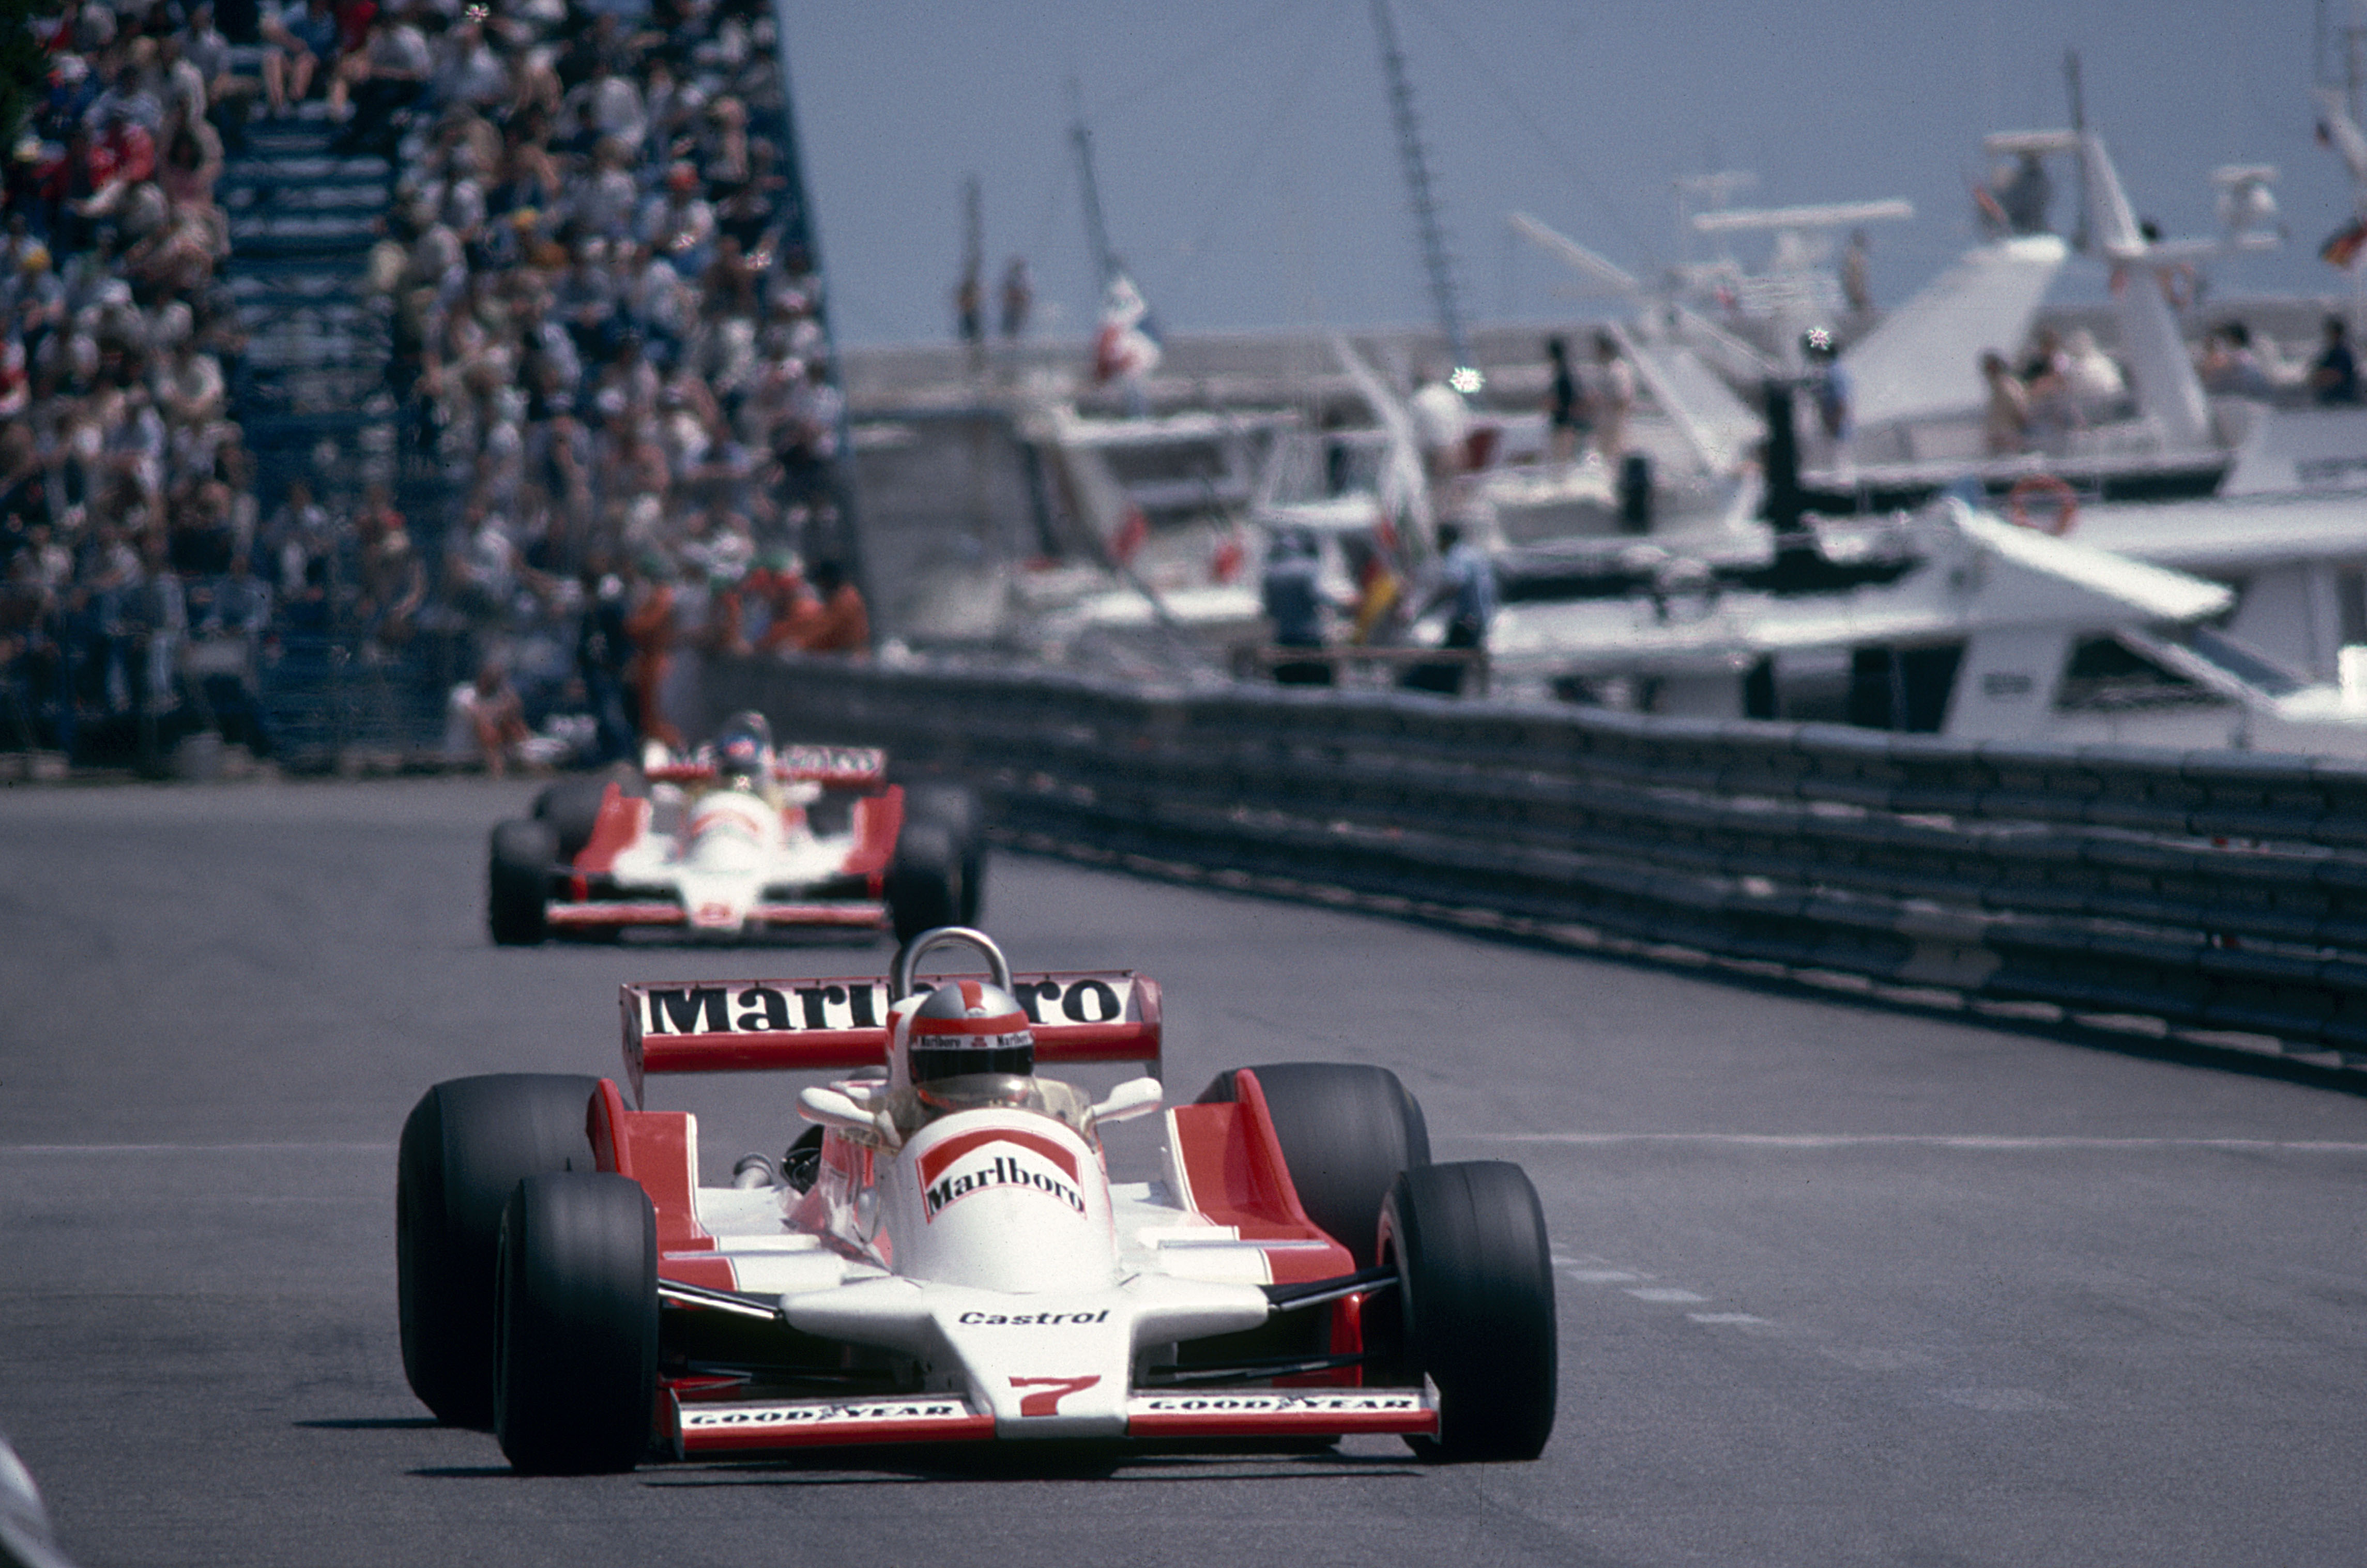 Формула 1 гонка 2 этап. Гонки Formula 1. Первая формула 1. Формула 1 1940. Formula 1 car Monaco.